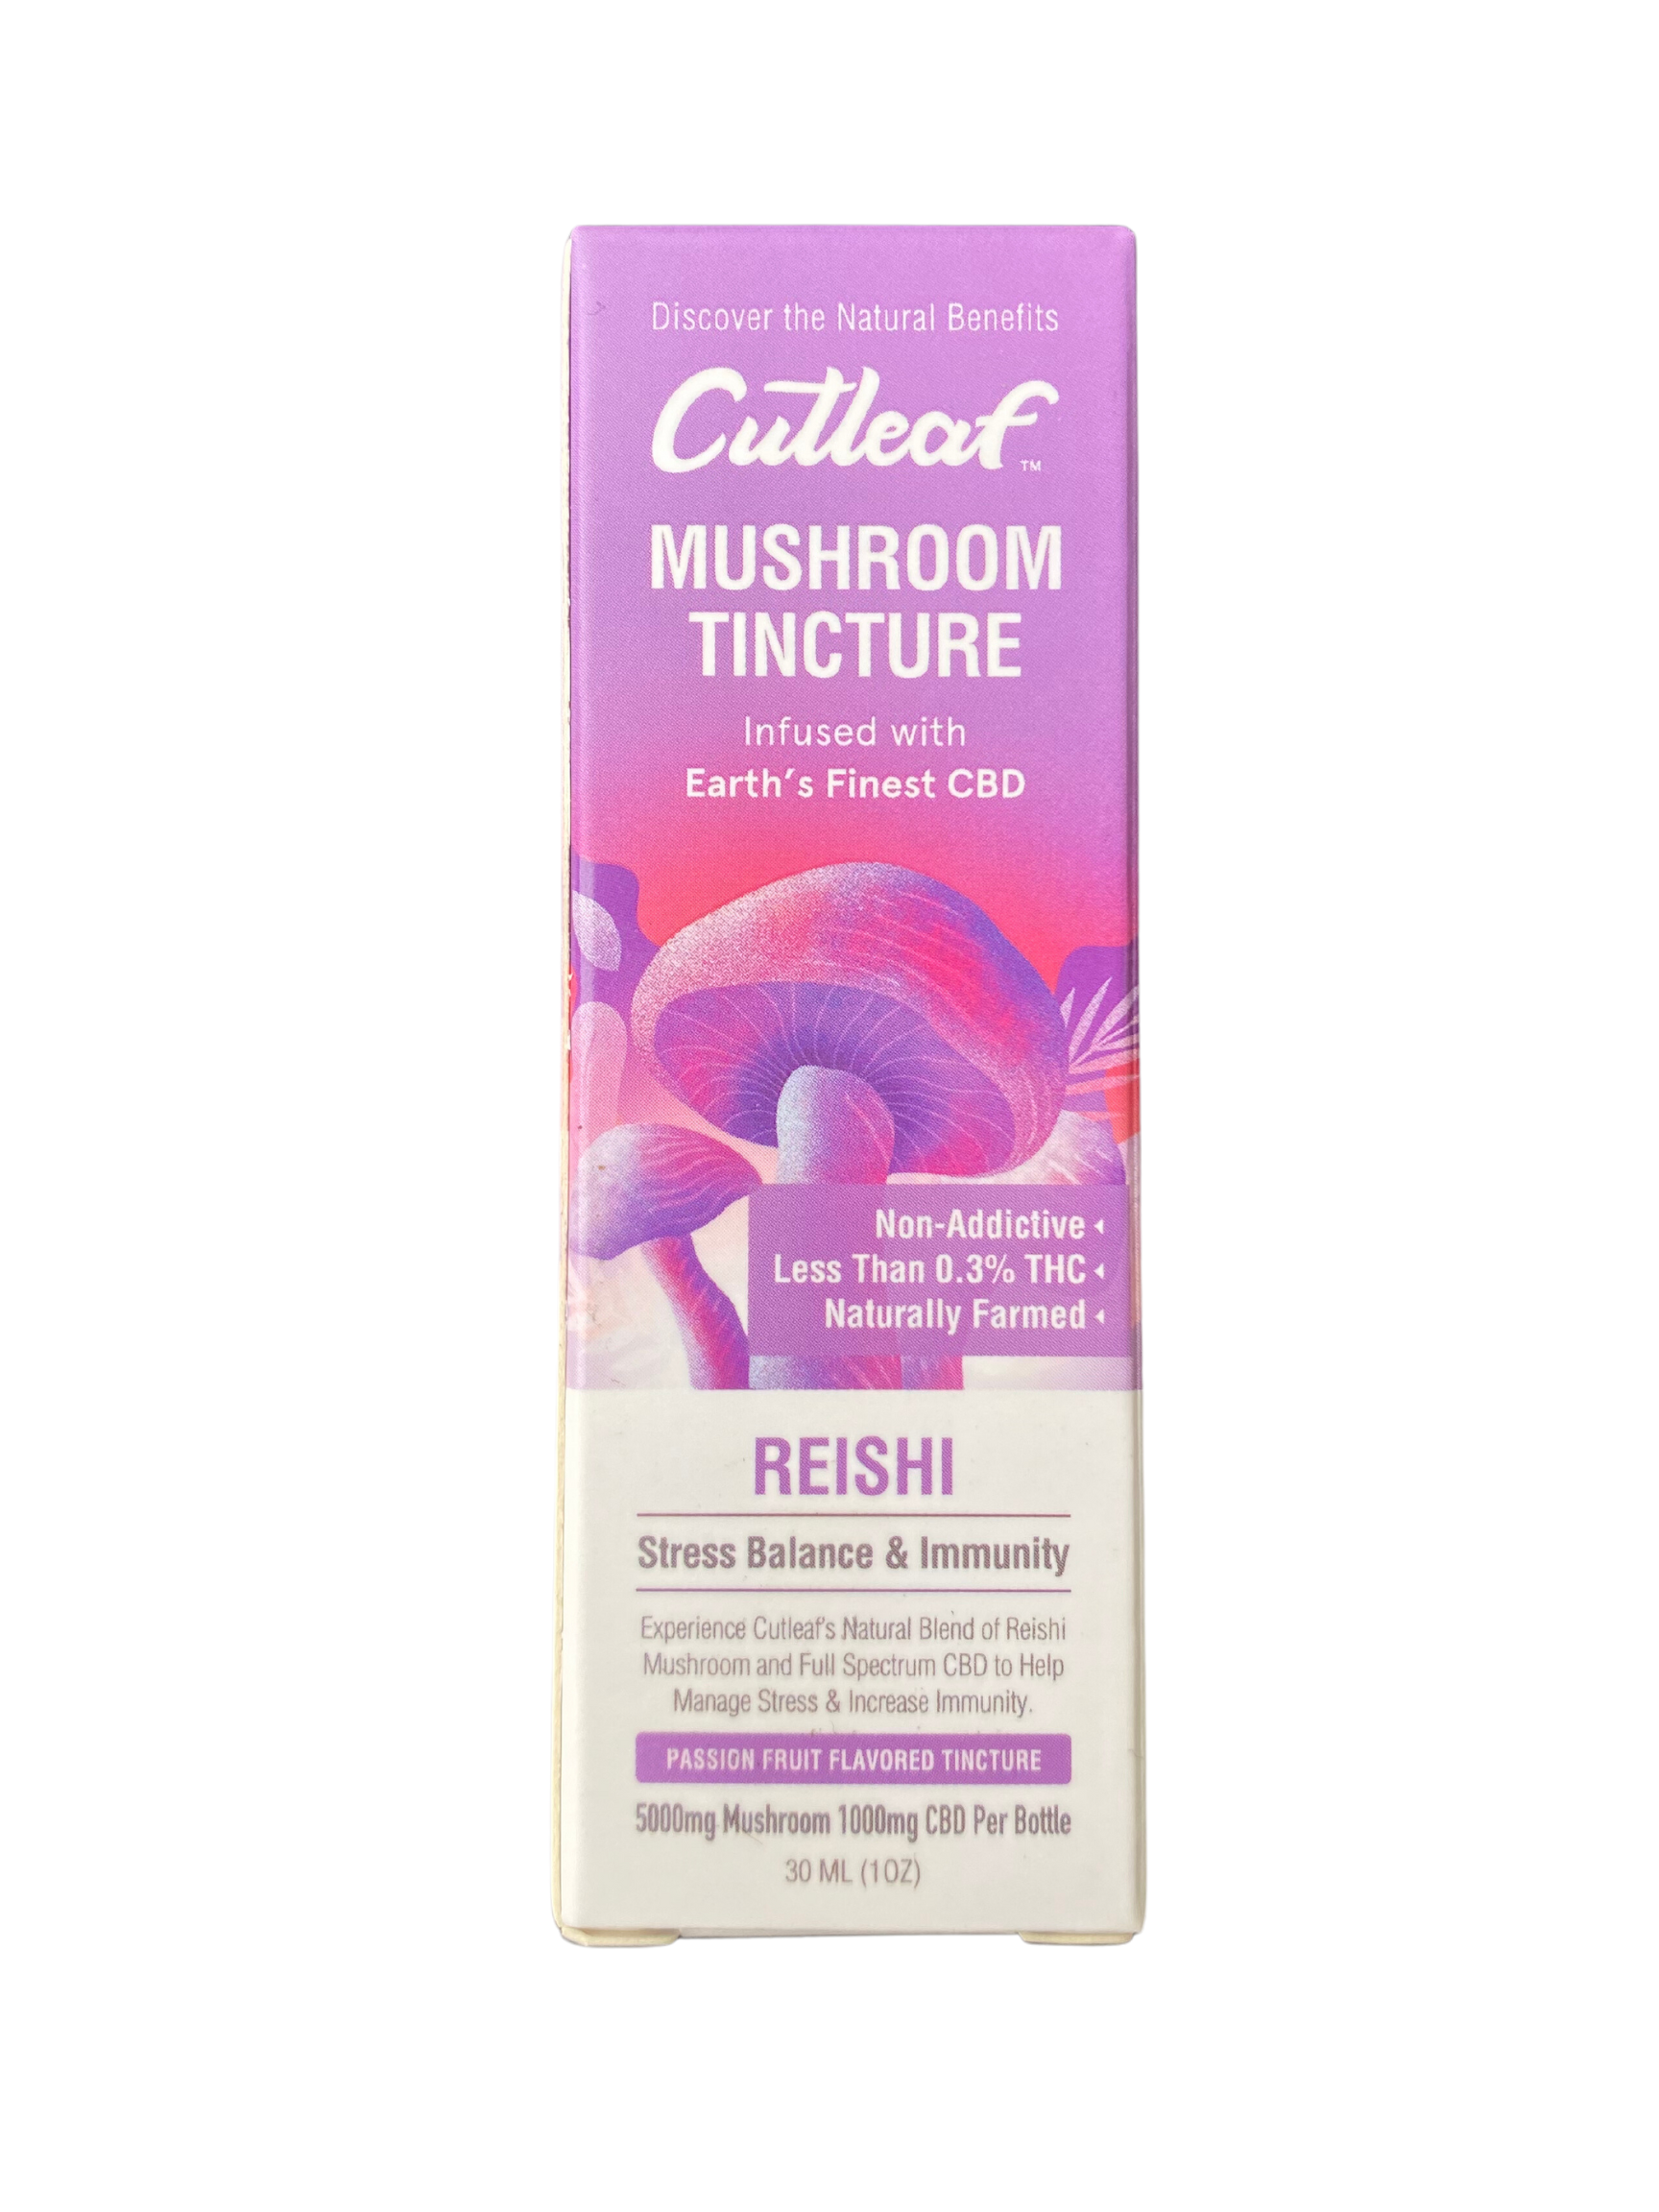 Cutleaf Mushroom Tincture - Reishi (Stress Balance & Immunity)